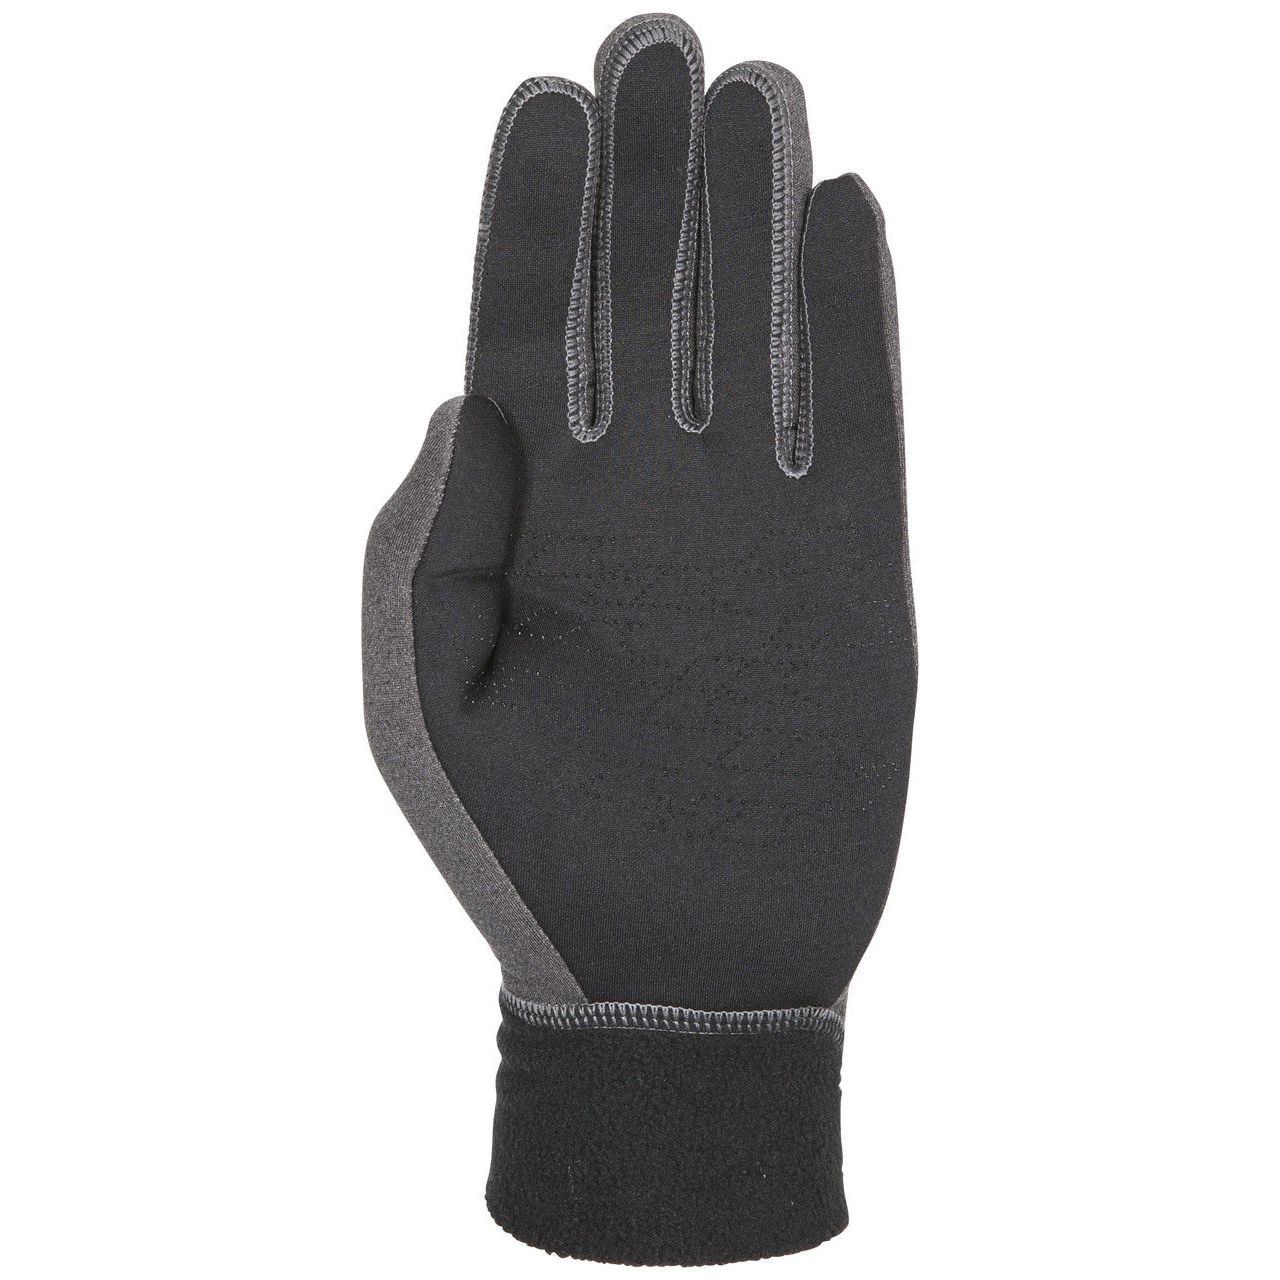 Atherton - Adults Unisex Touchscreen Gloves